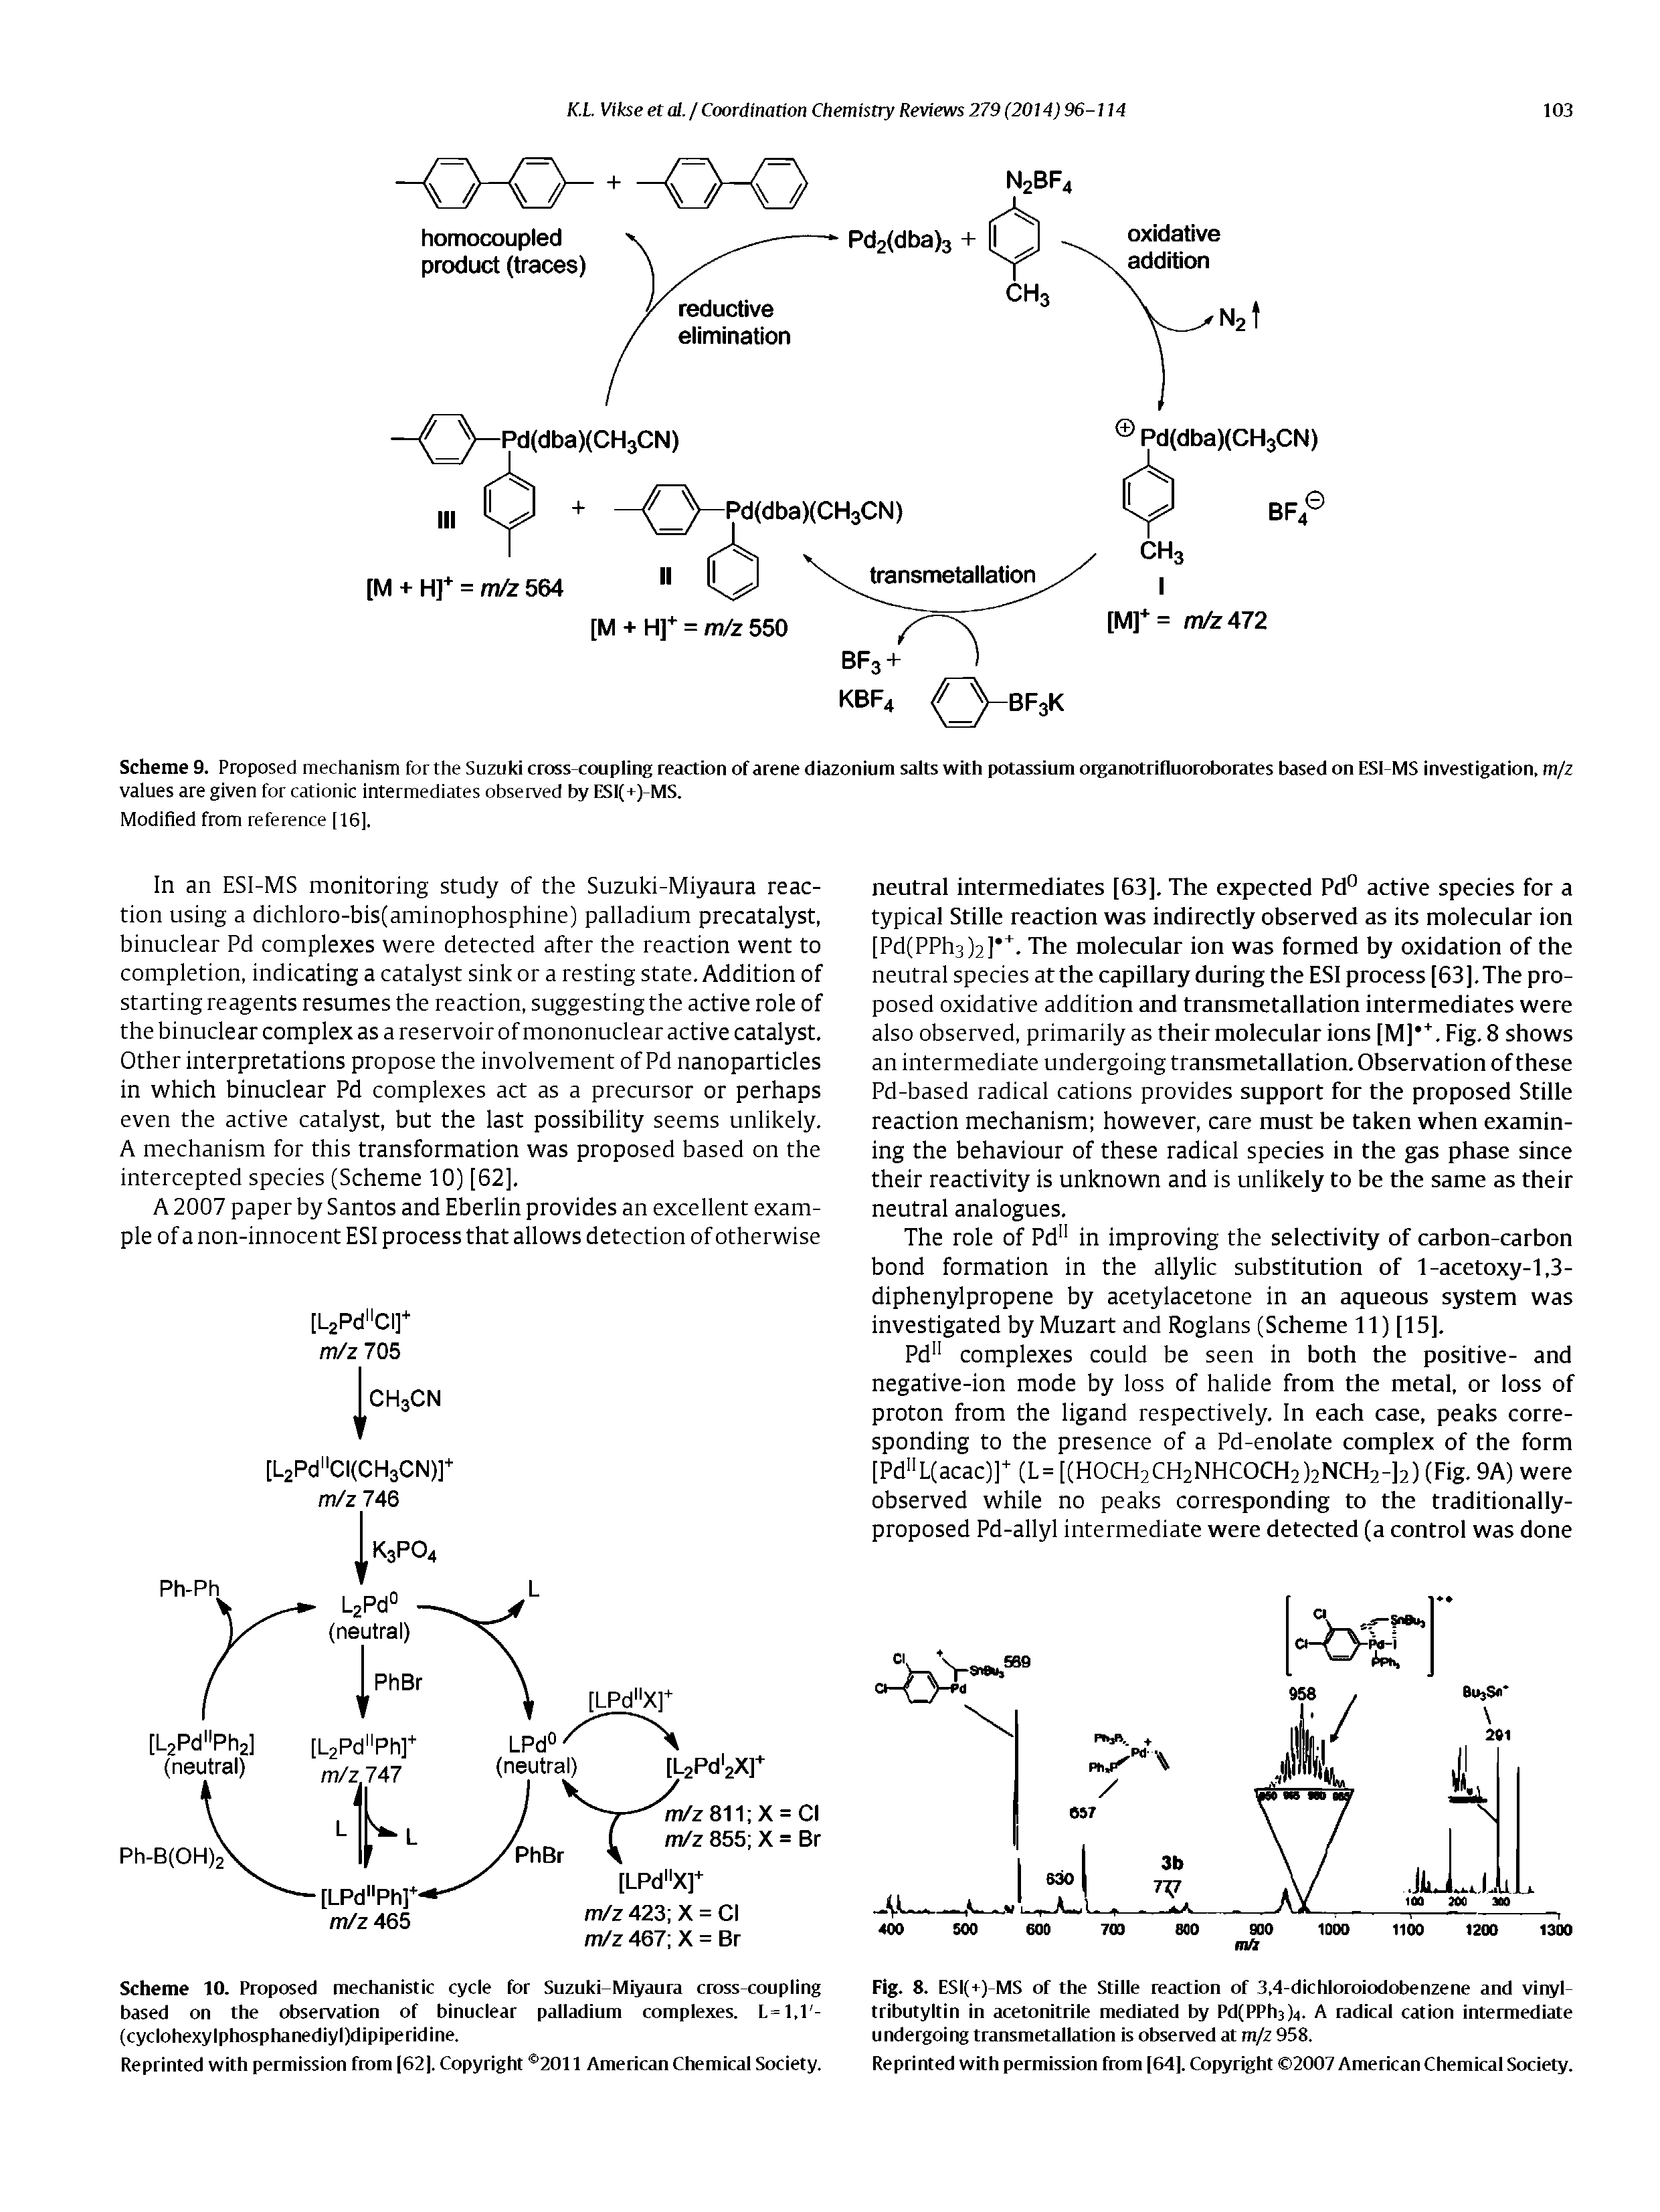 Scheme 10. Proposed mechanistic cycle for Suzuki-Miyaura cross-coupling based on tbe observation of binuclear palladium complexes. L=l.l -(cyclohexylpbospbanediyl)dipiperidine.